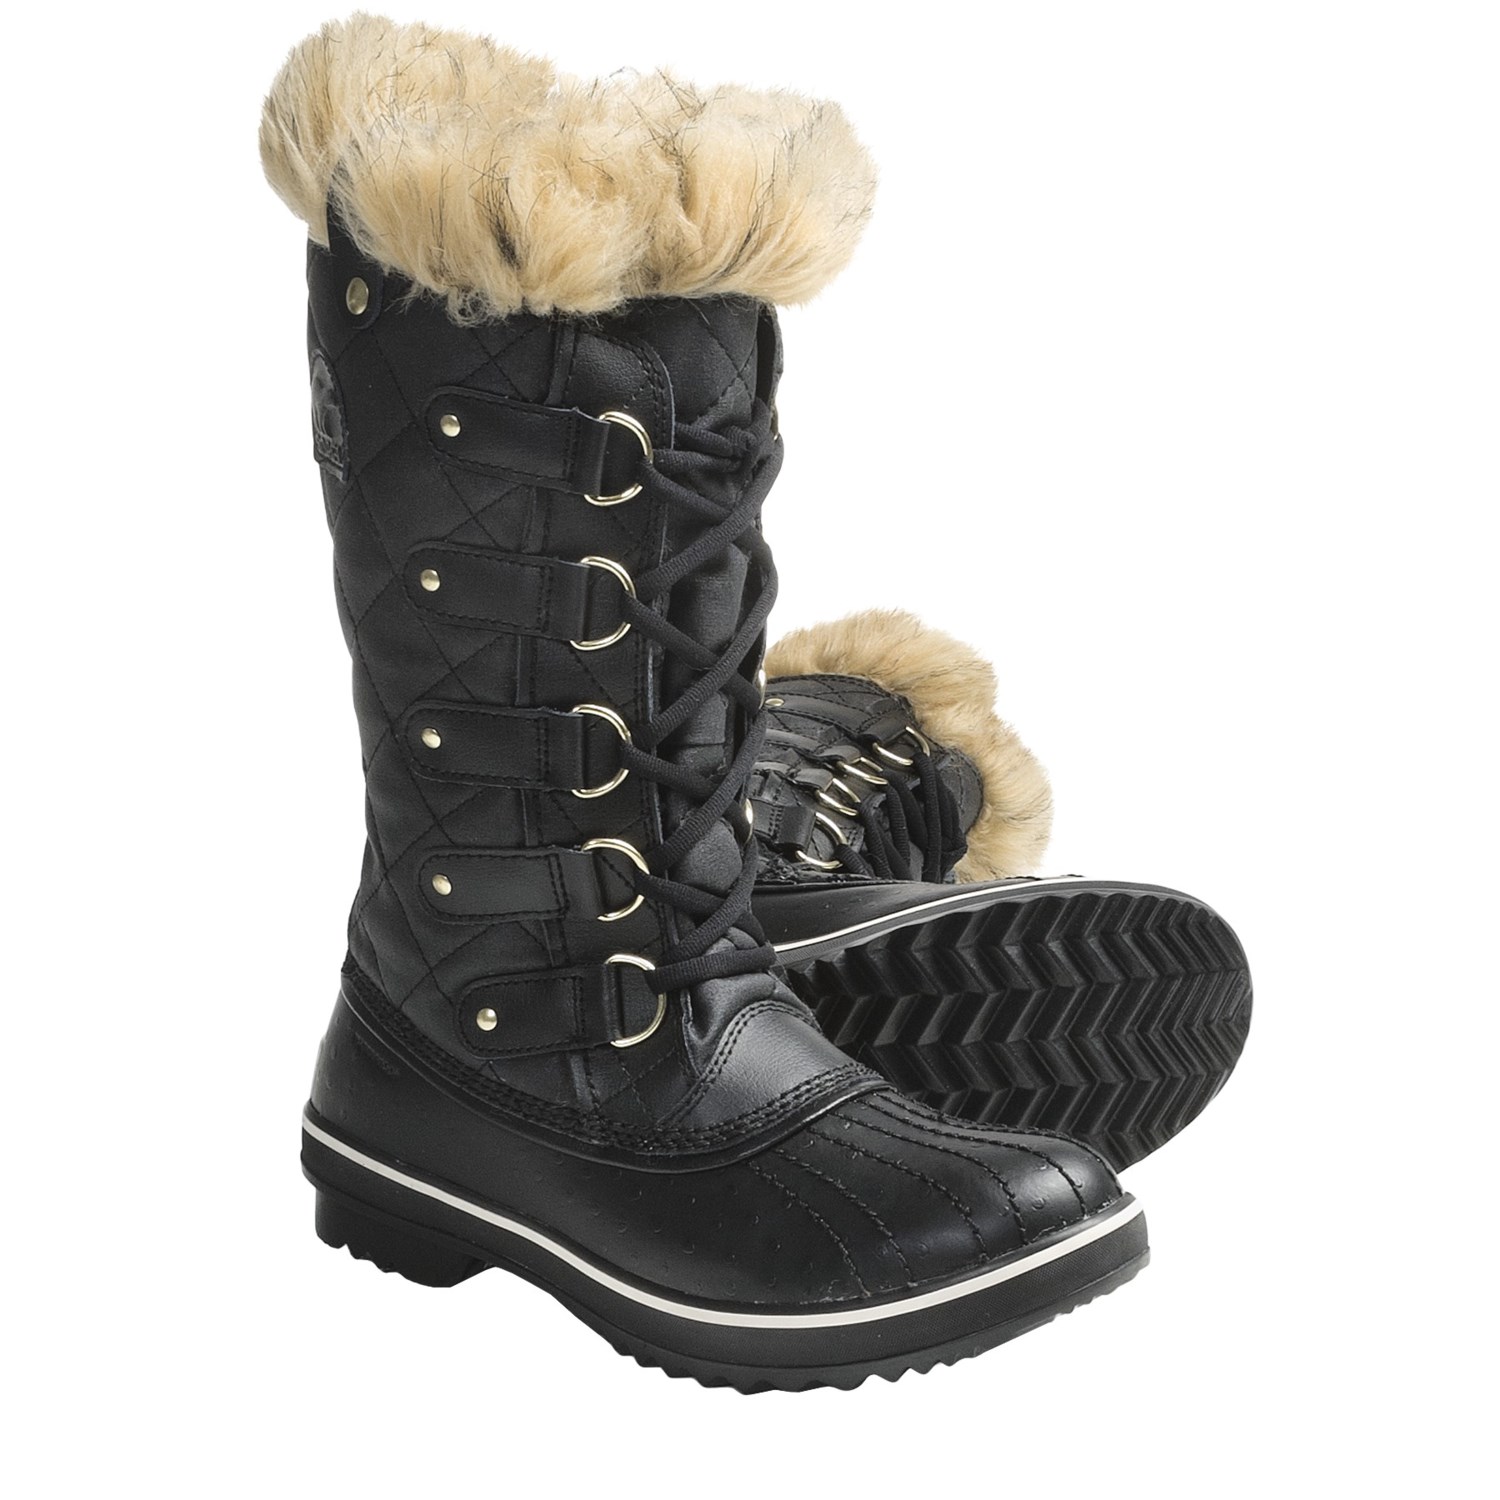 Sorel Tofino CVS Pac Boots (For Women) 5177D